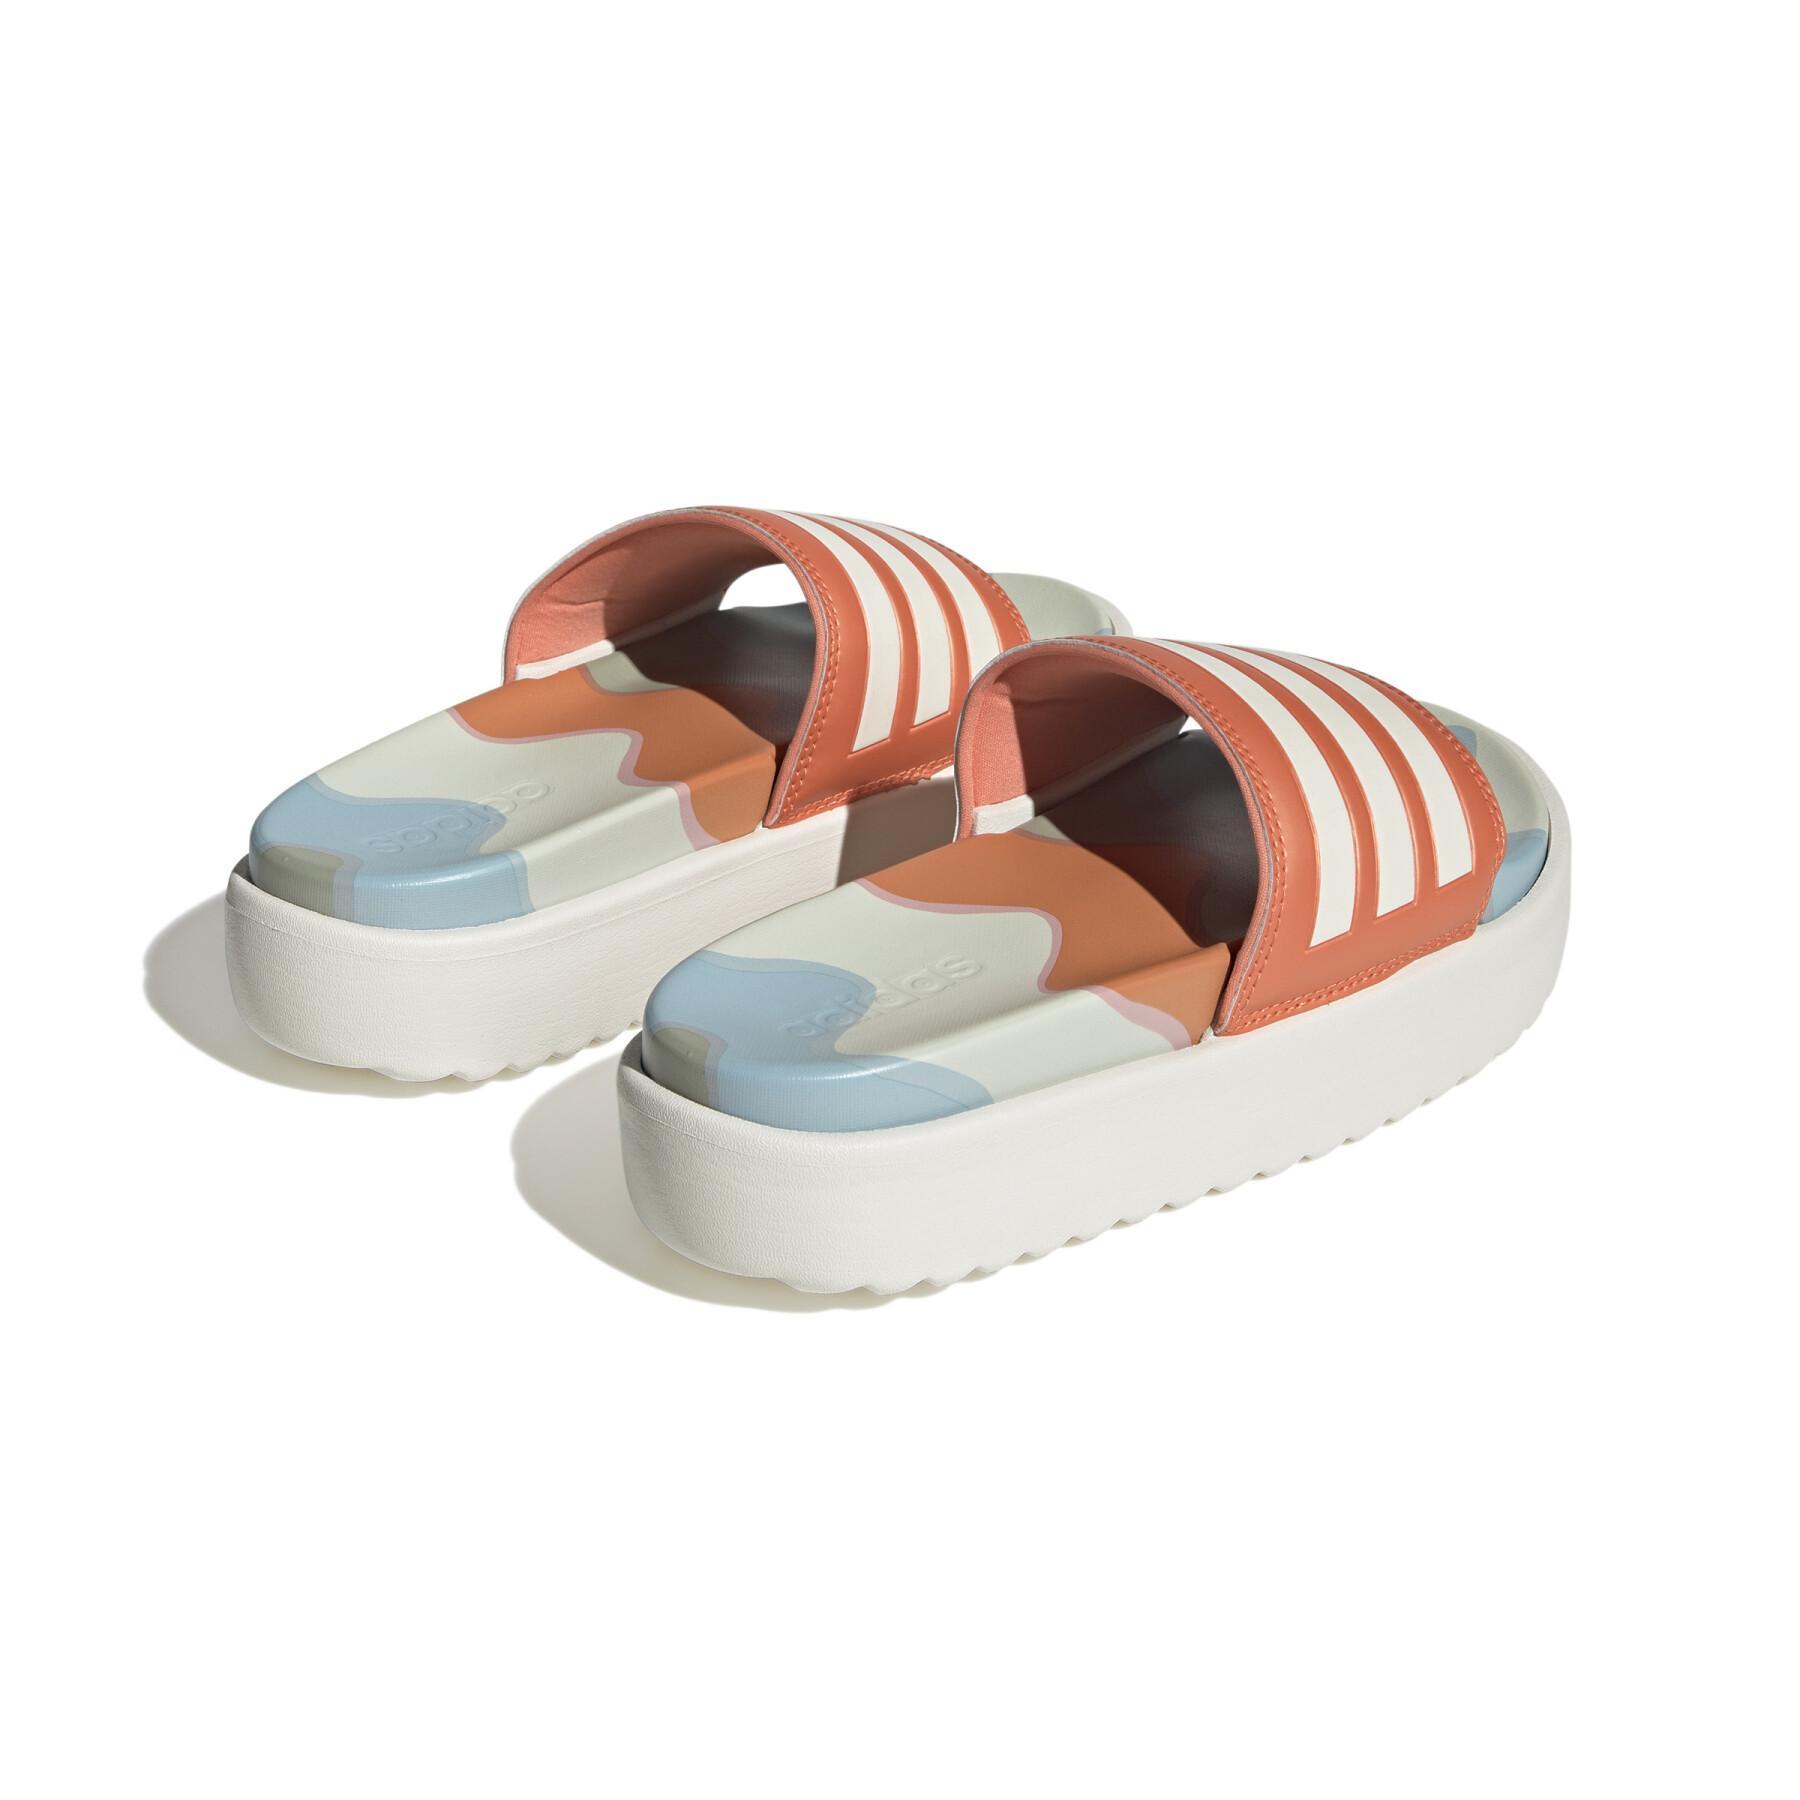 Women's flip-flops adidas X Marimekko Aqualette Ocean